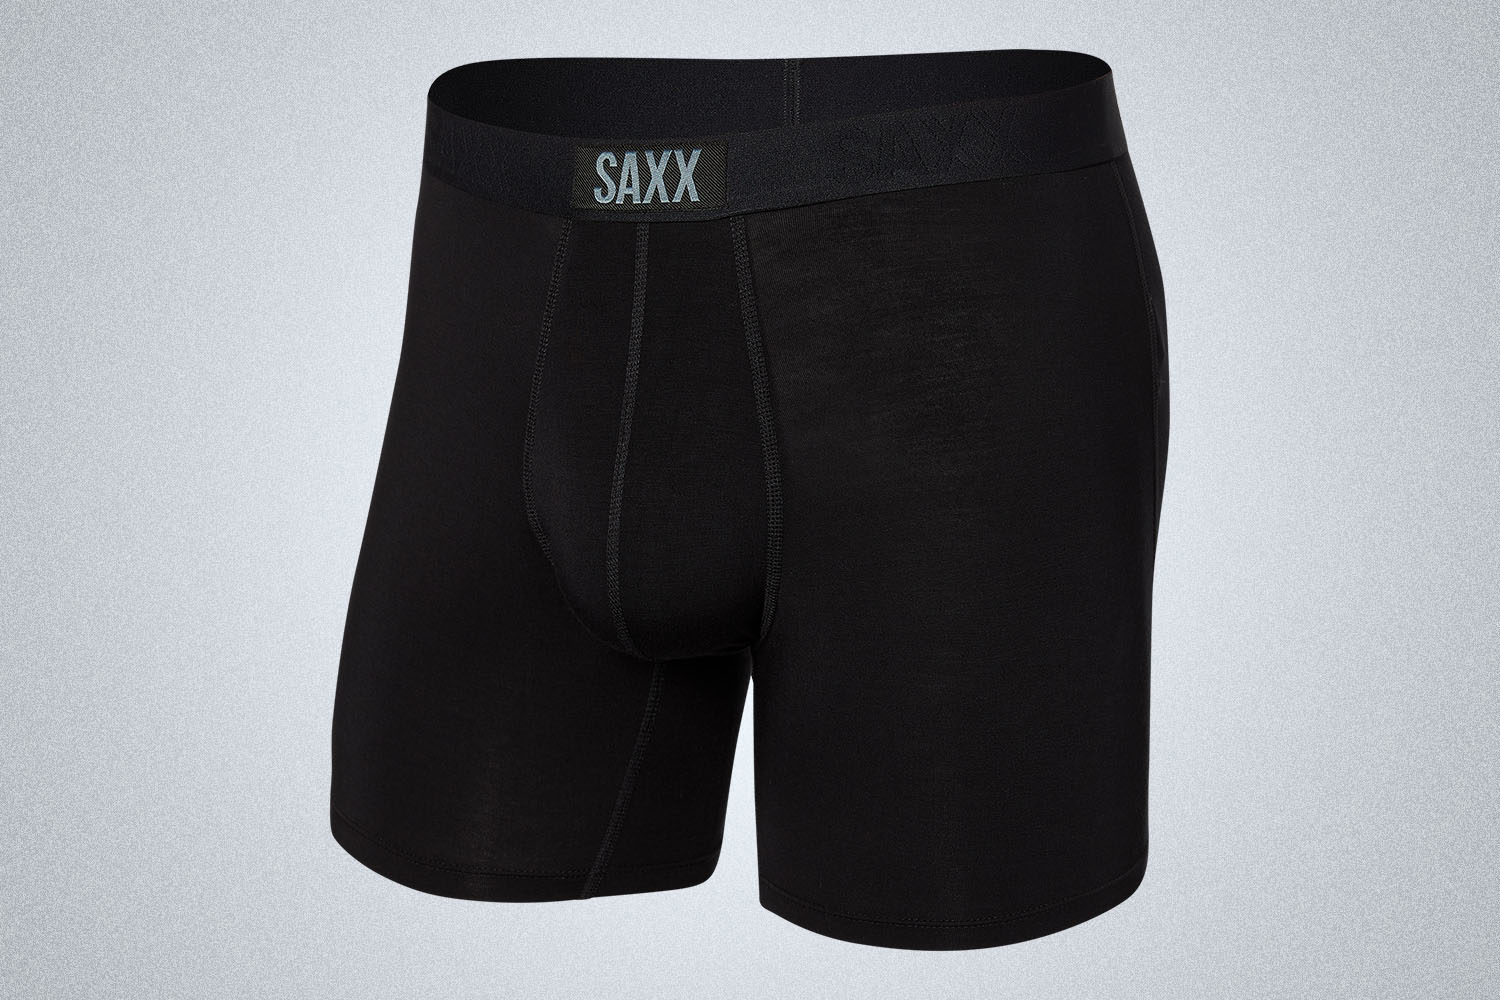 a pair of SAXX underwear on a grey background